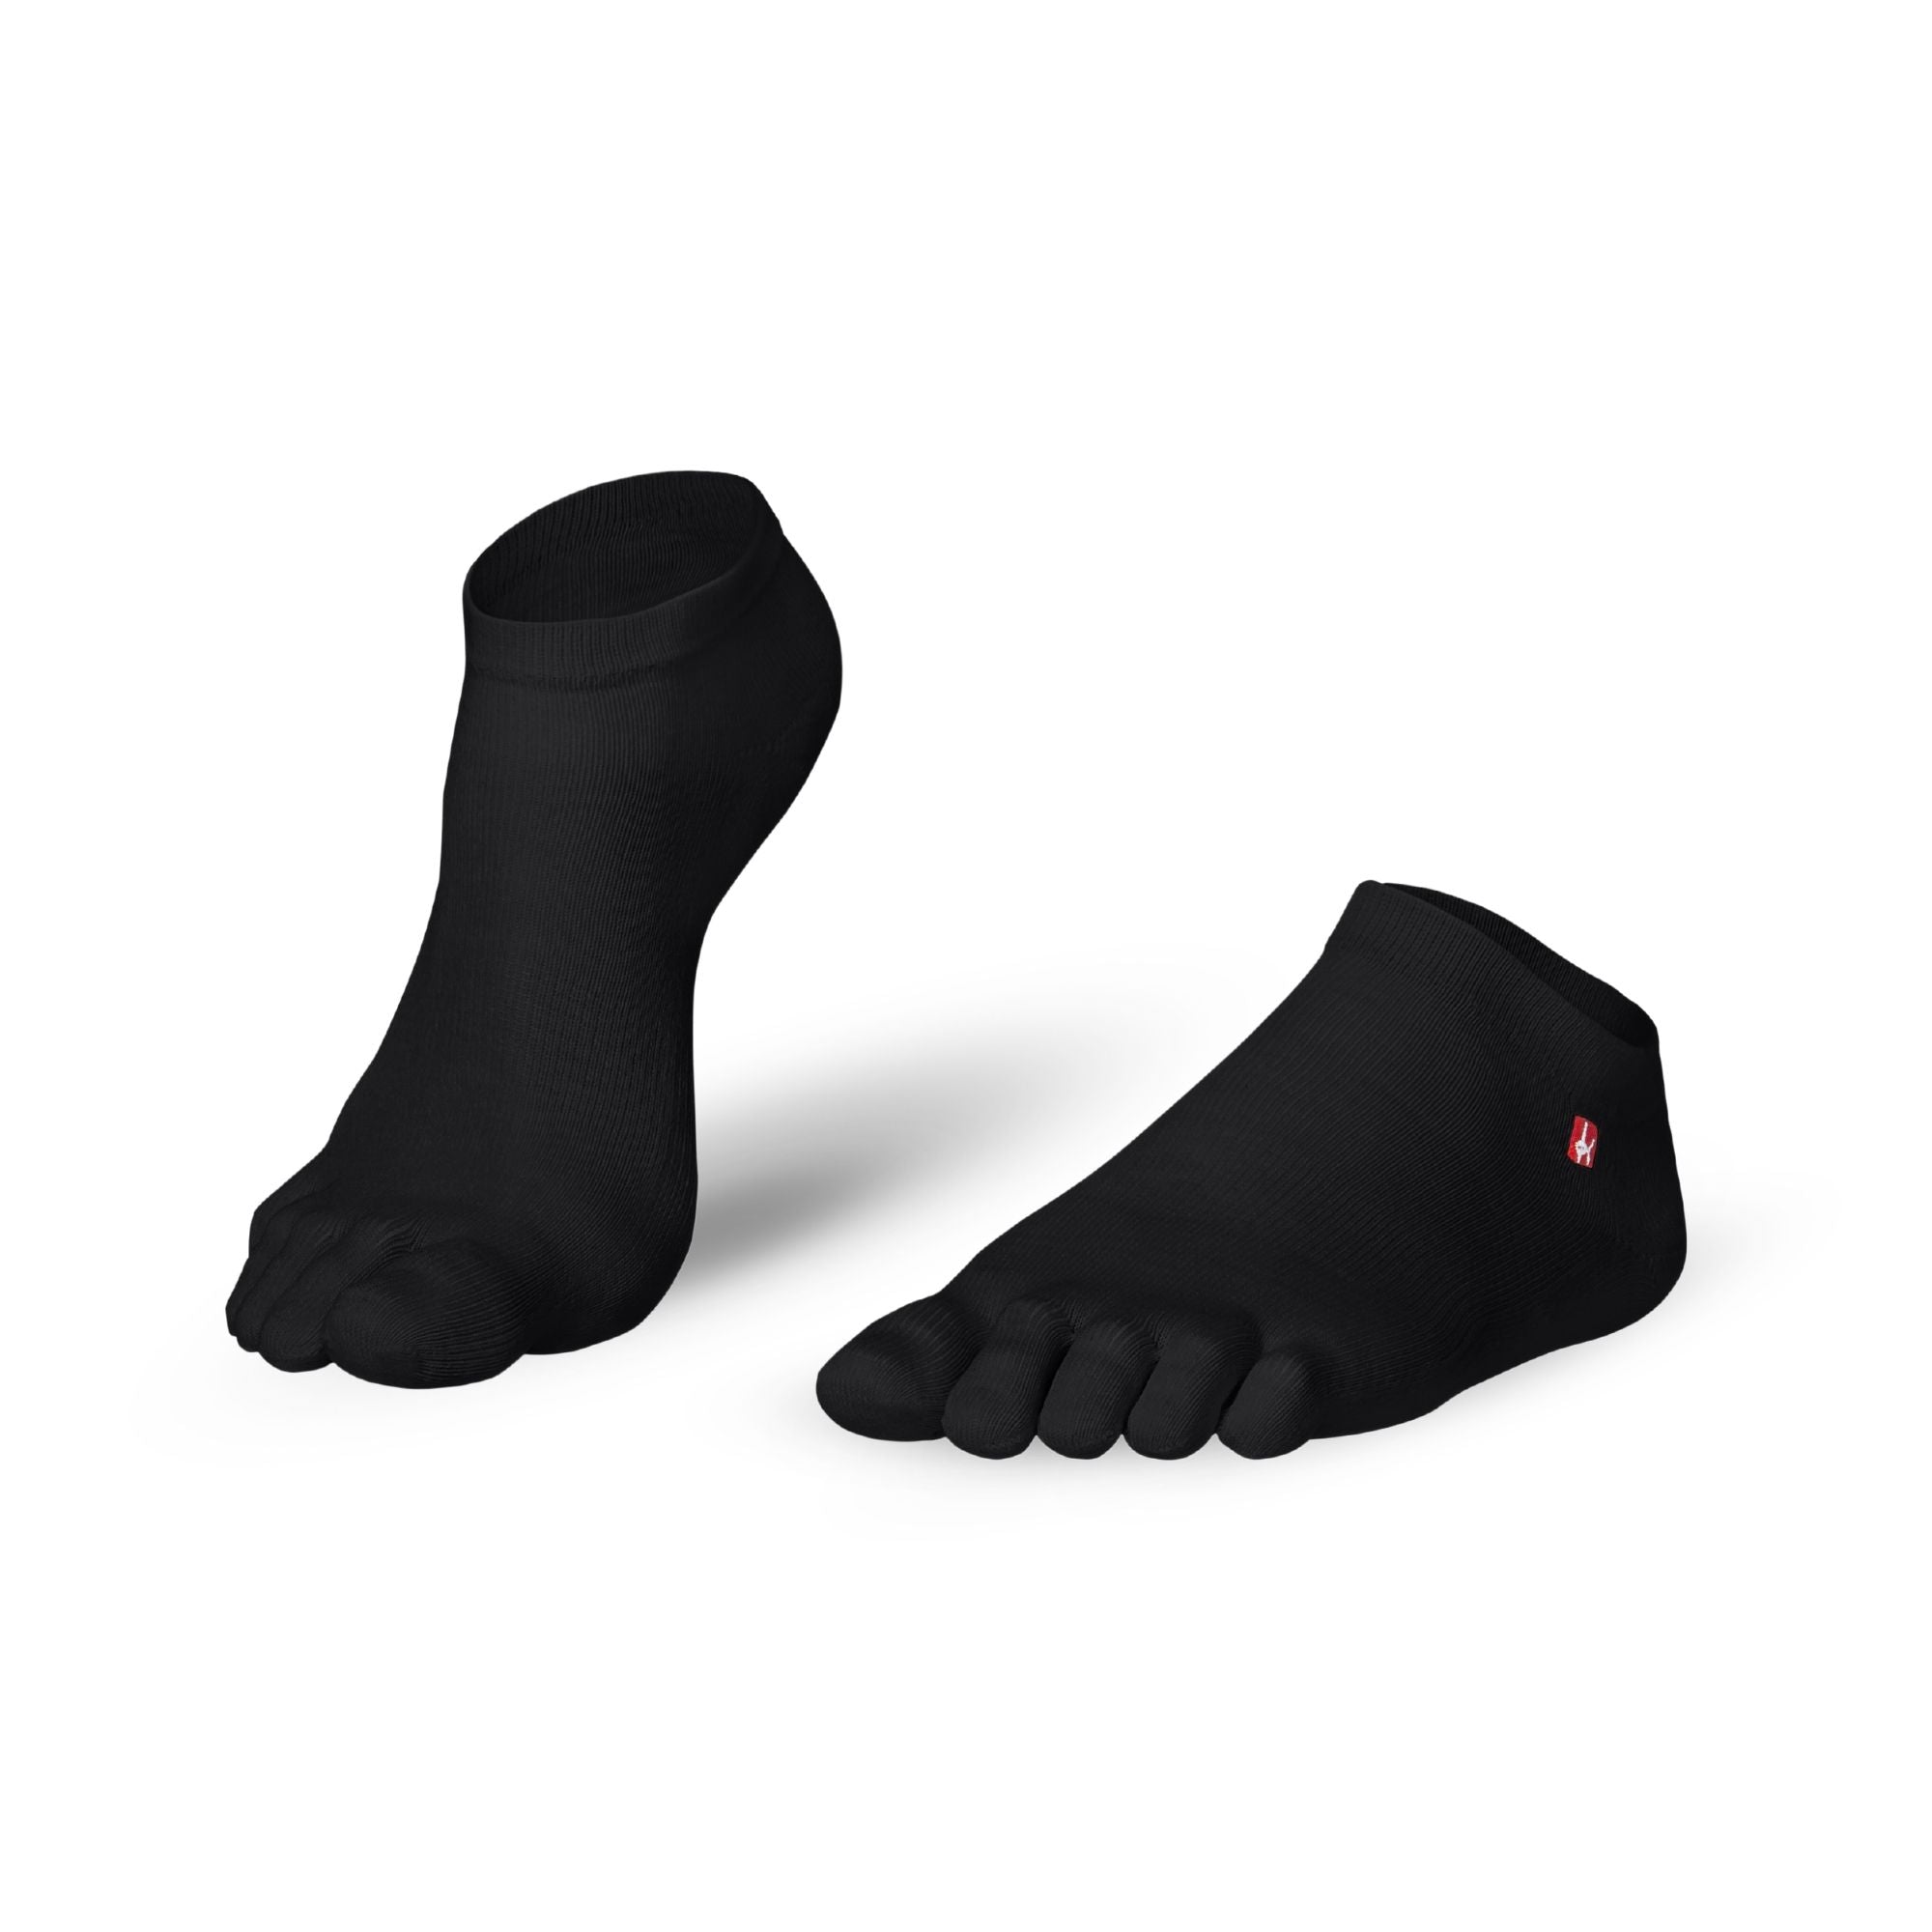 Calcetines de punta Coolmax Sneaker de Knitido Track & Trail ultralite fresh en antracita gris oscuro